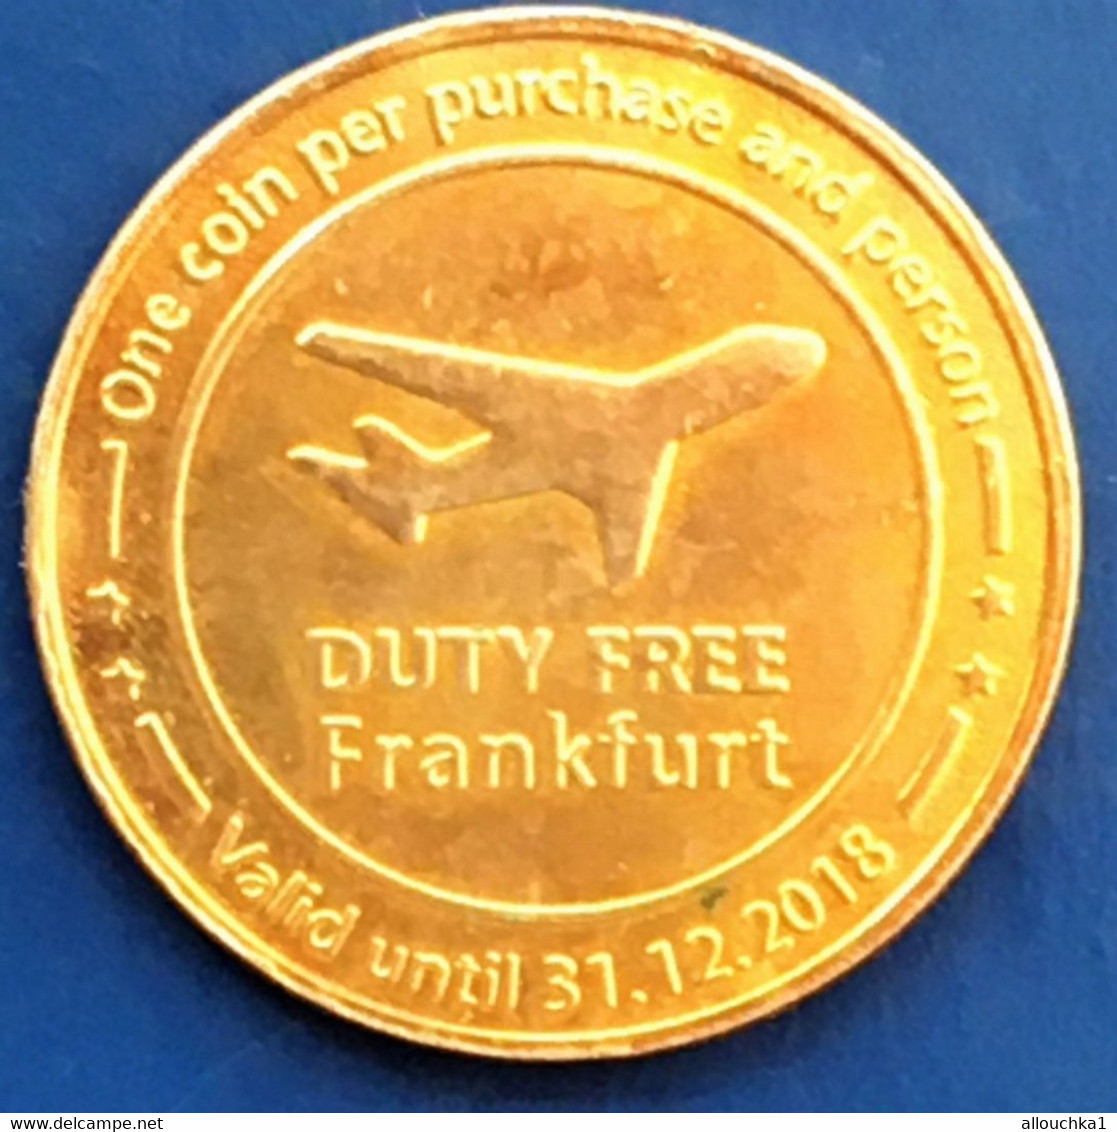 Exclusive At Frankfurt Airport-Frankfort Aéroport-Duty Free One Coin Per Purchase And Person-Valid Limit 31-12-2018--2€ - Professionnels/De Société